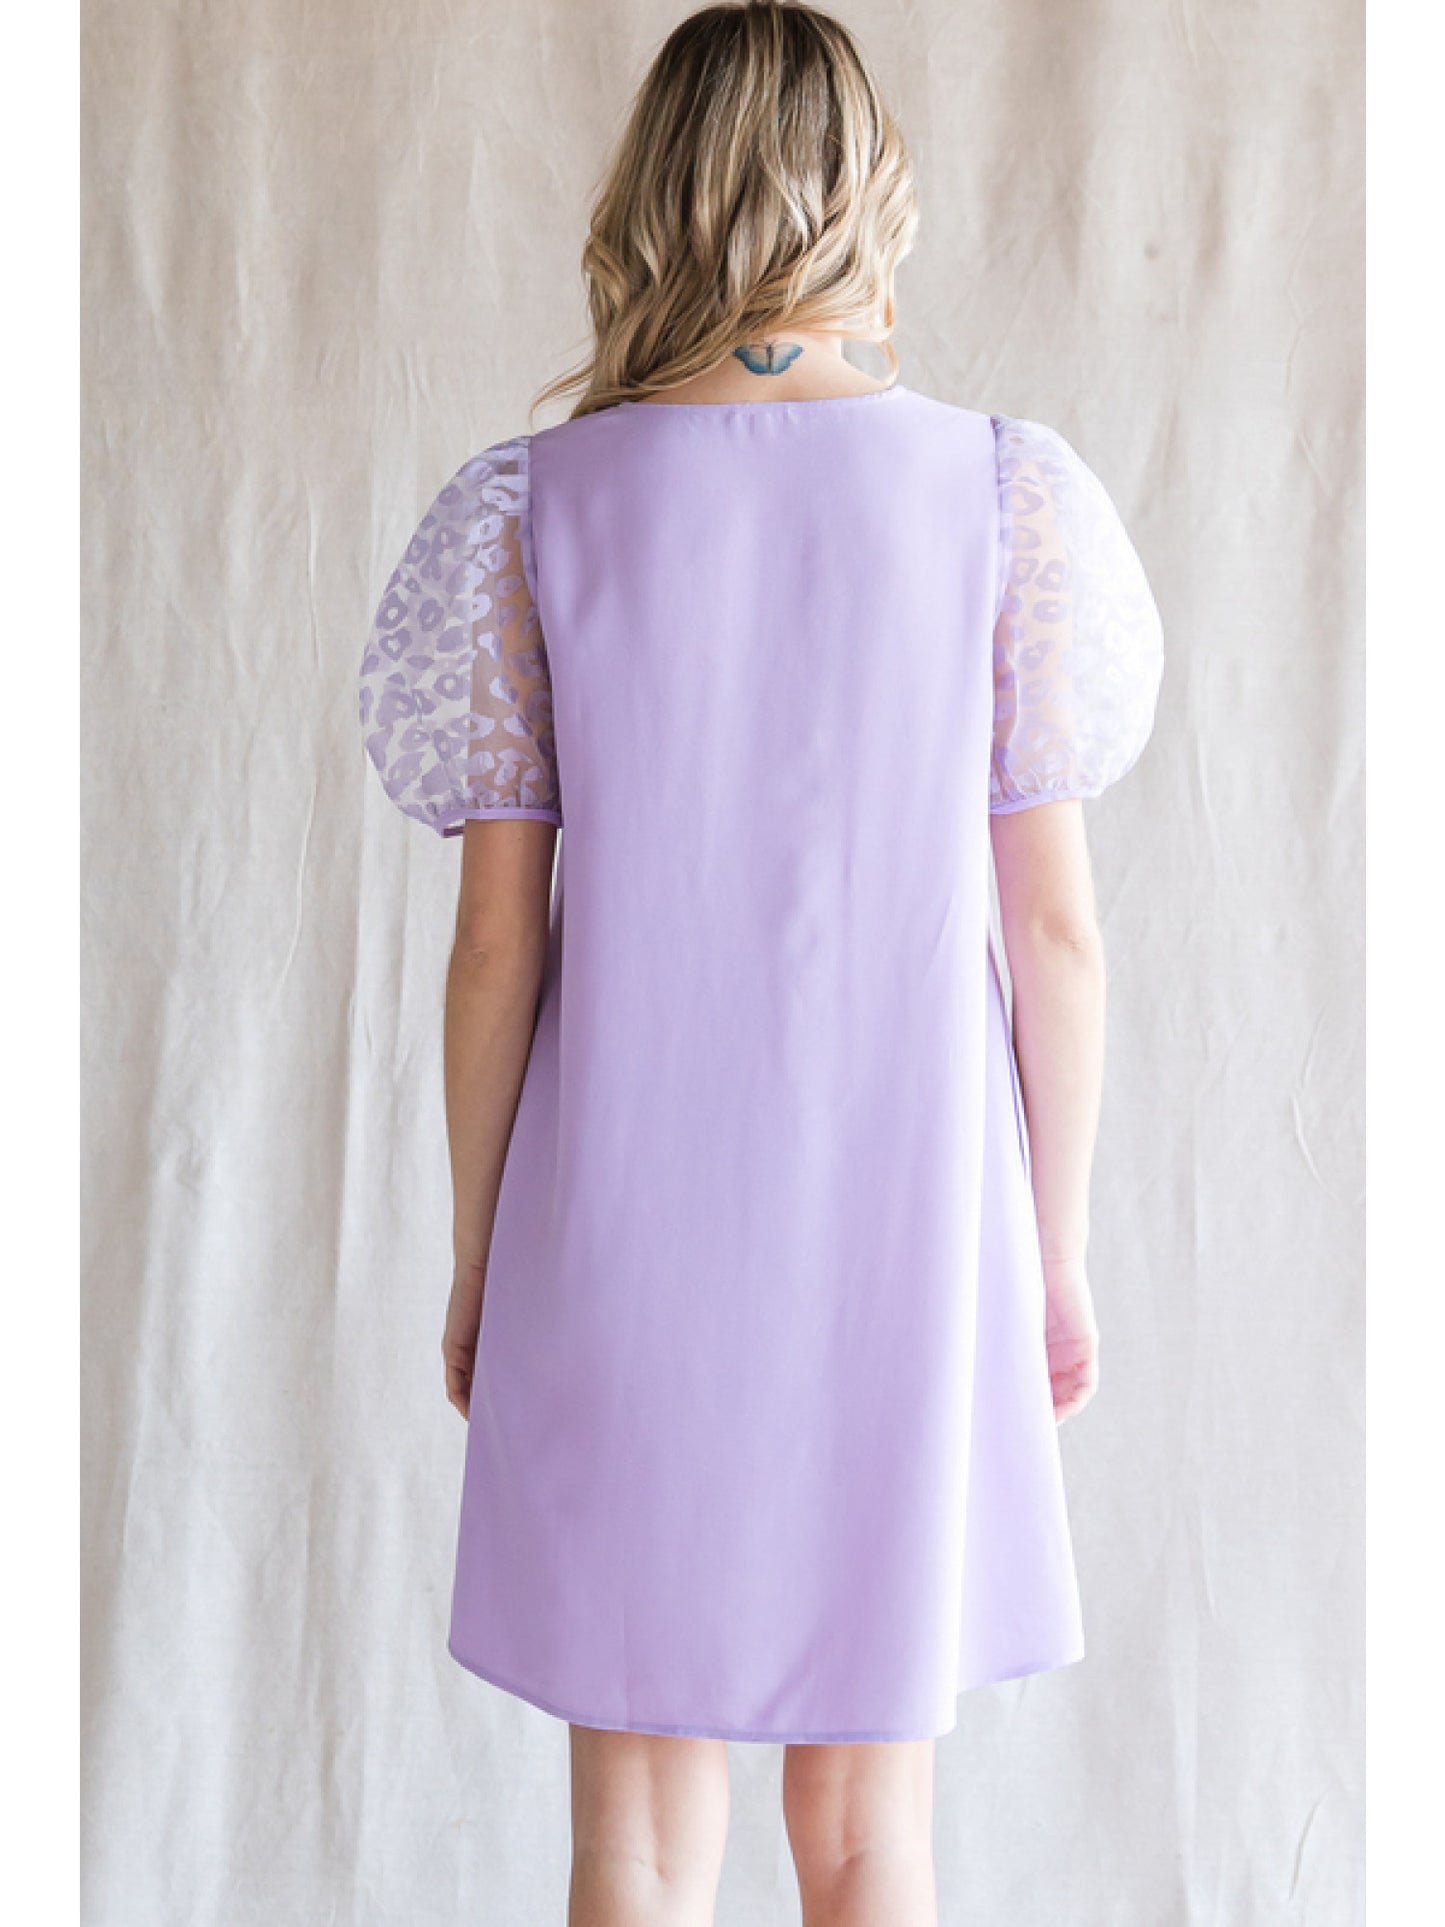 Lavender Animal Print Mesh Sleeved Mini Dress